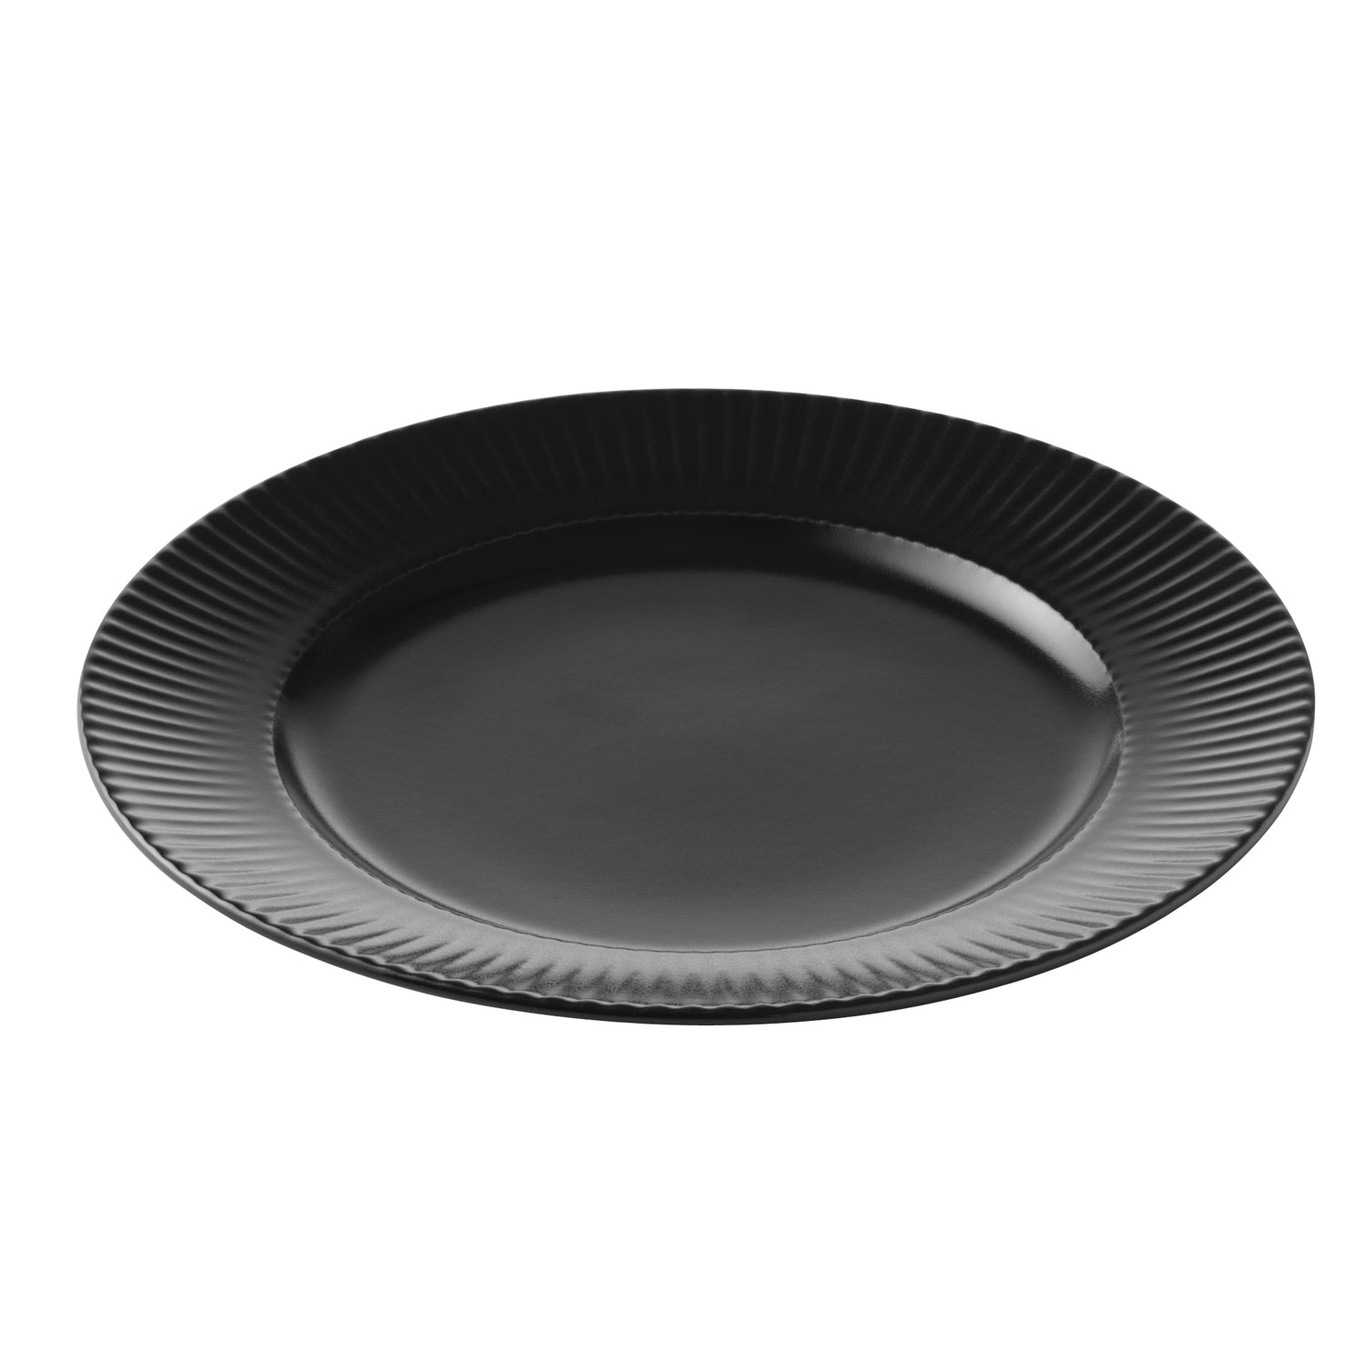 Groovy Breakfast Plate 21 cm, Black